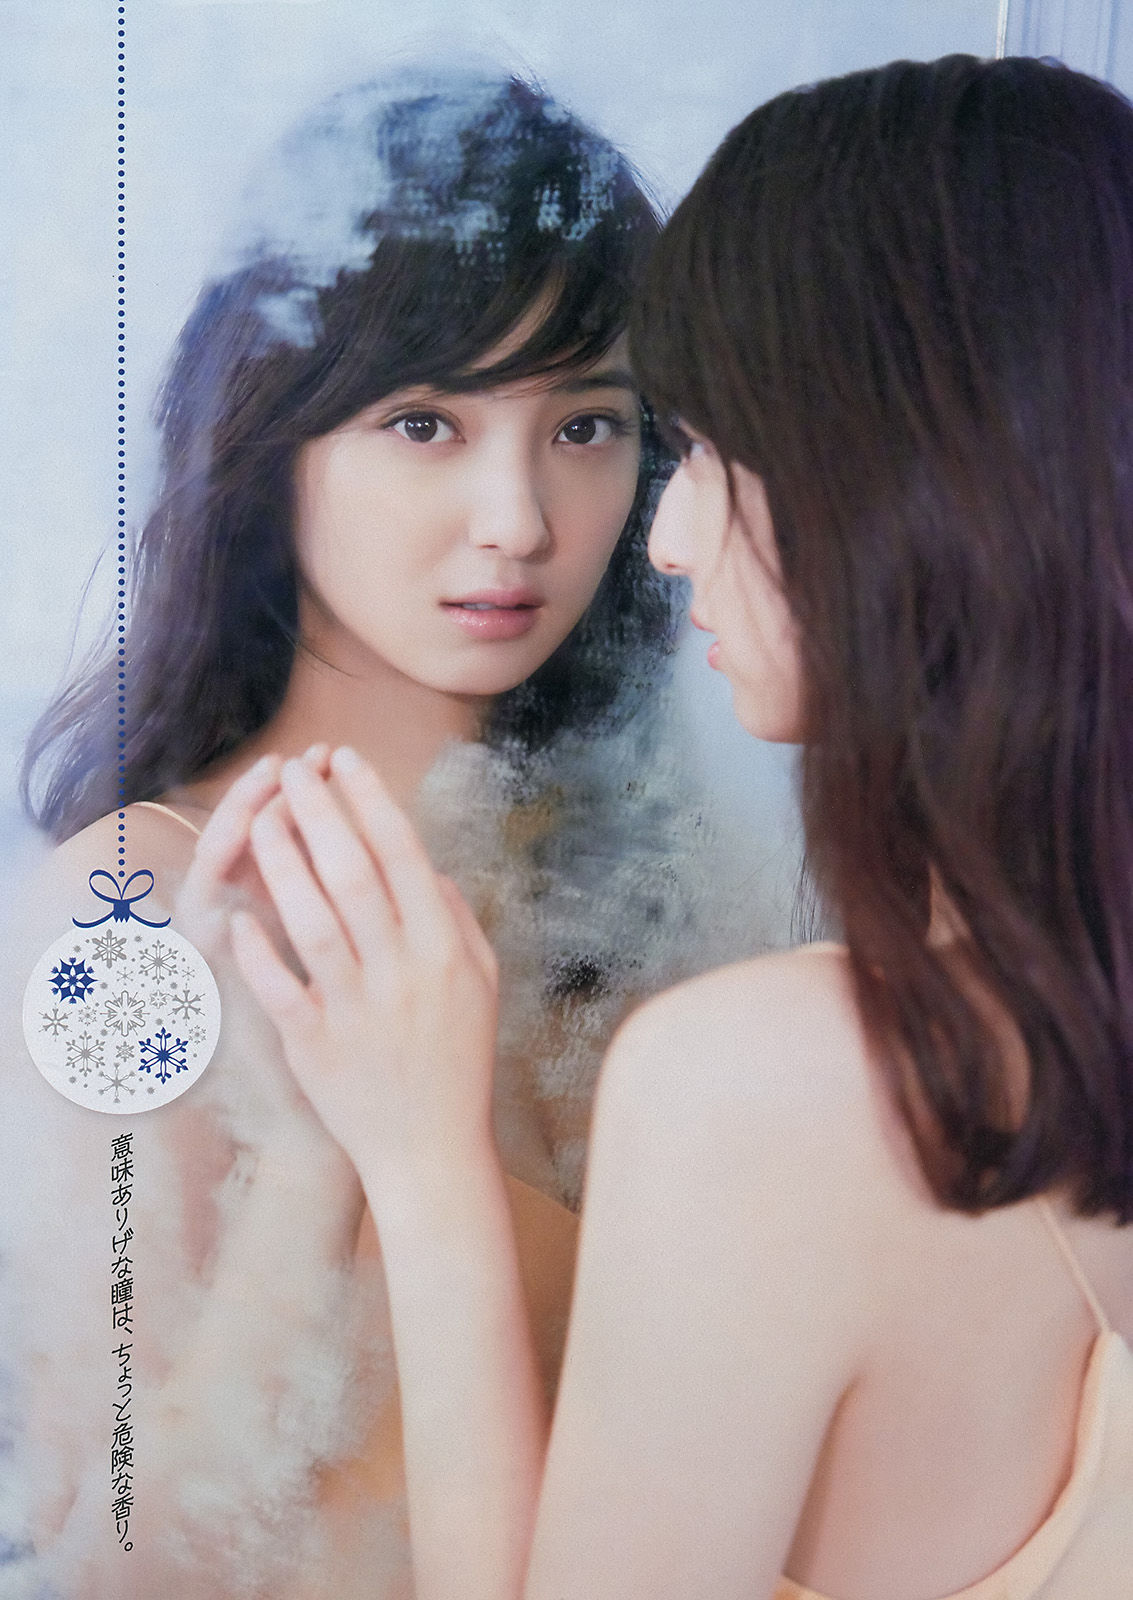 [Young Magazine]气质女神:佐佐木希(佐々木希)高品质写真作品个人分享(13P)